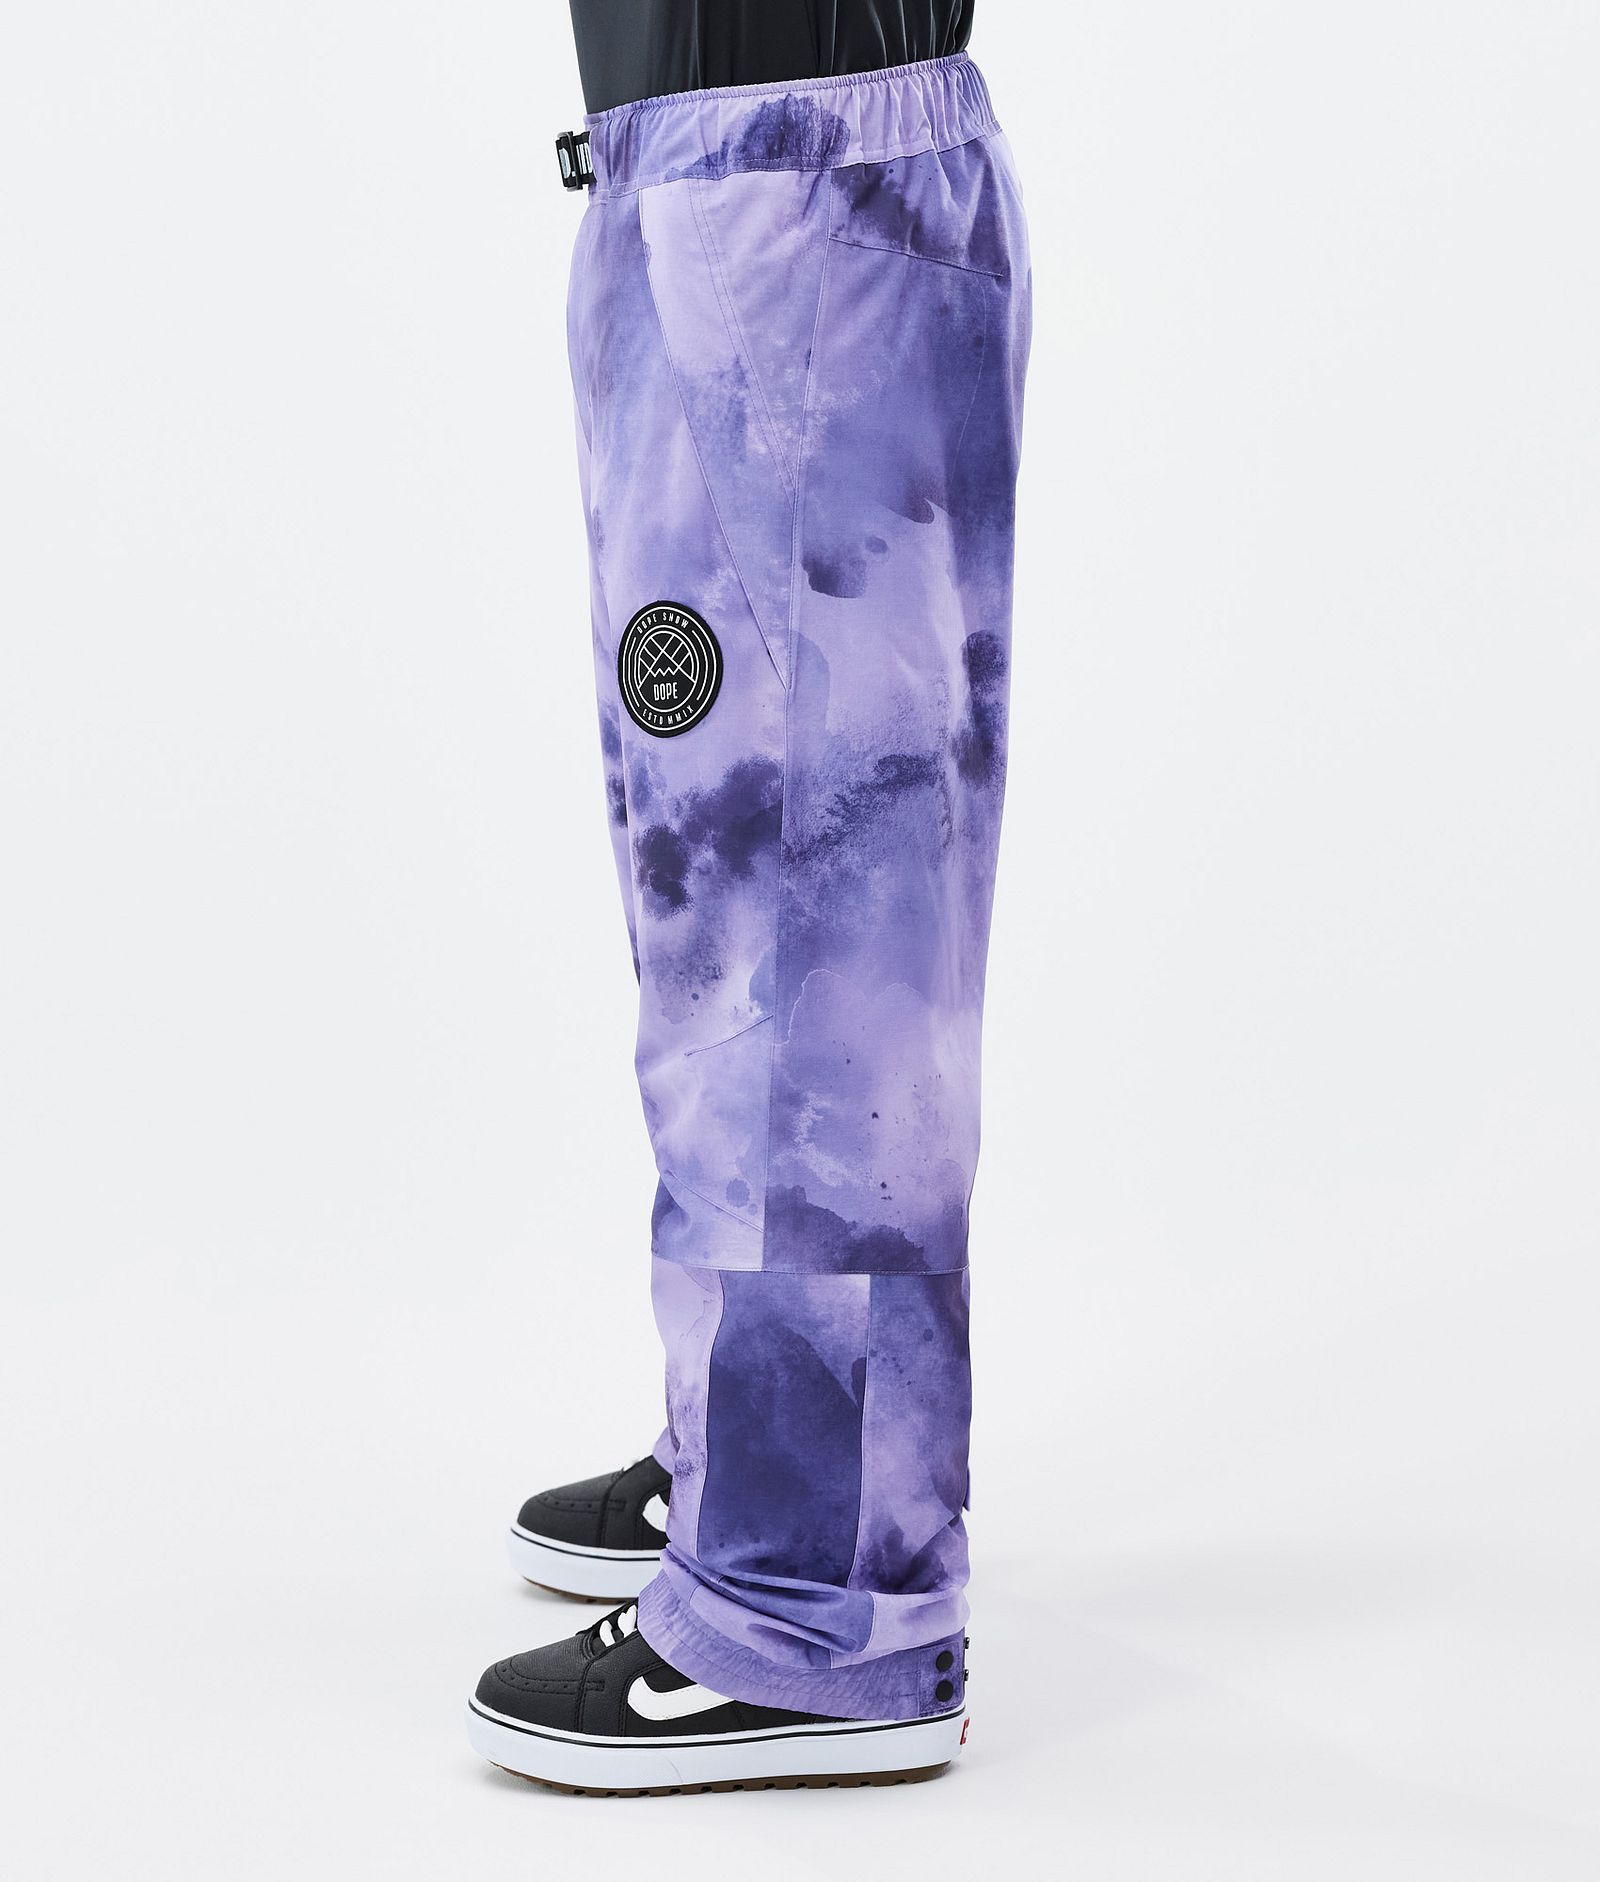 Blizzard Pantaloni Snowboard Uomo Liquid Violet